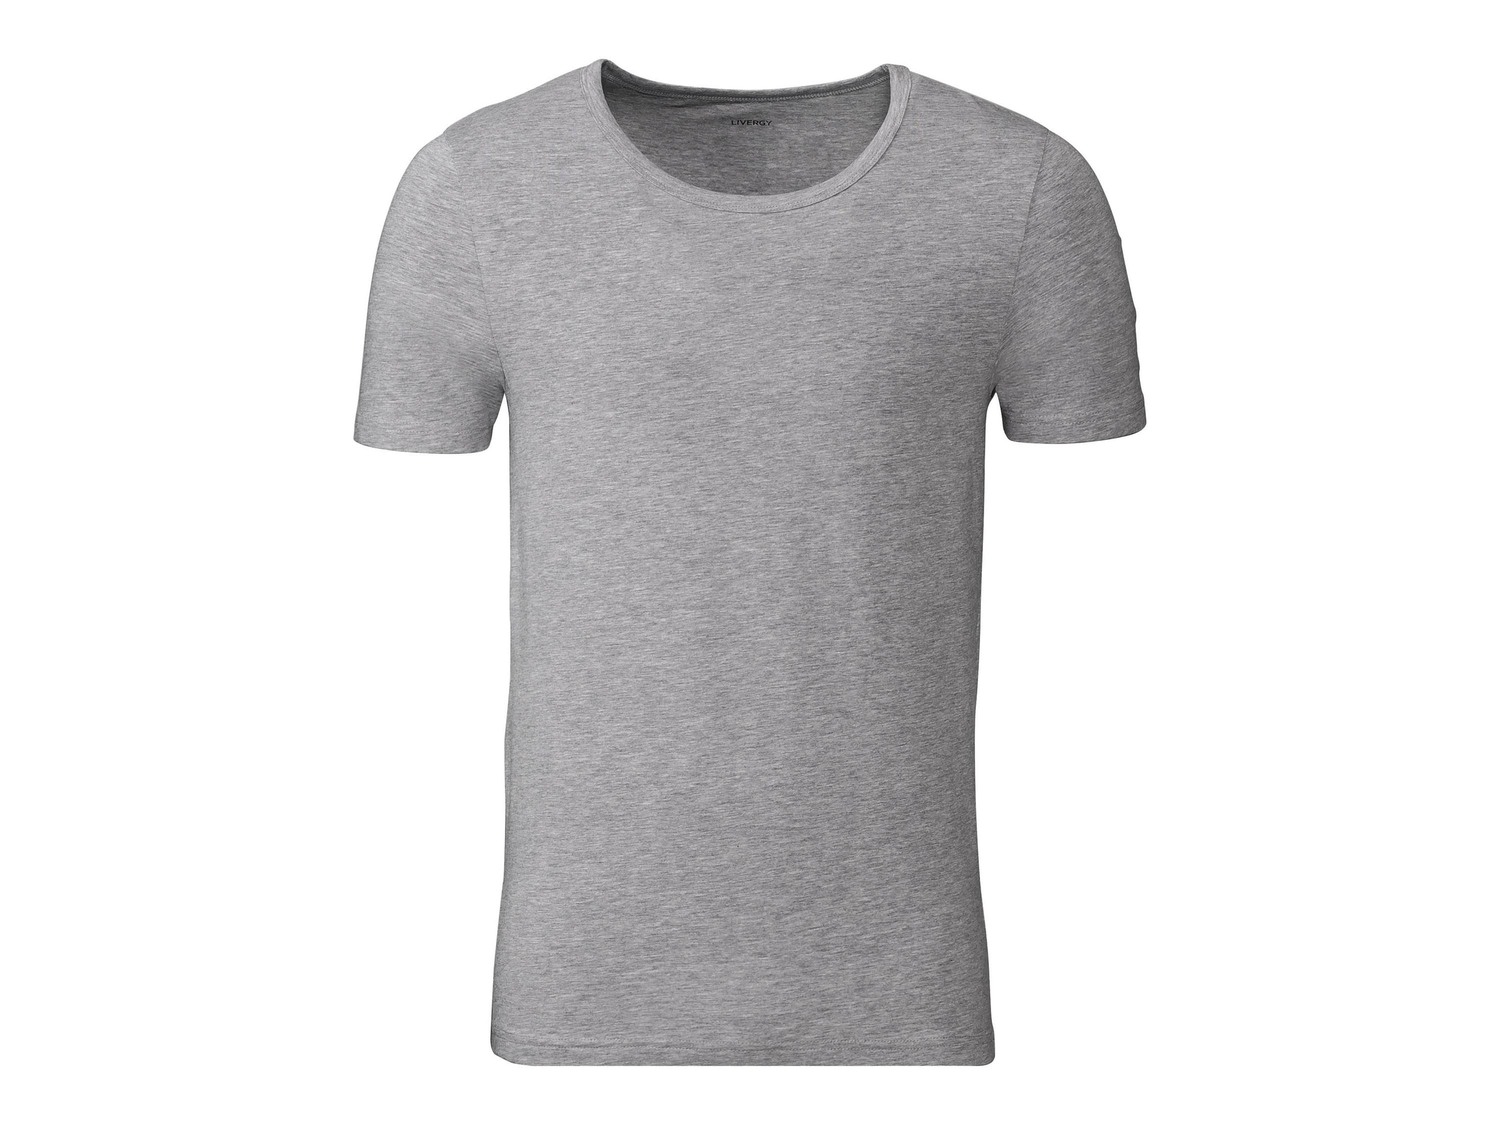 T-shirt intima da uomo Livergy, prezzo 4.99 &#8364;  
-  Scollo rotondo o a V
- GOTS